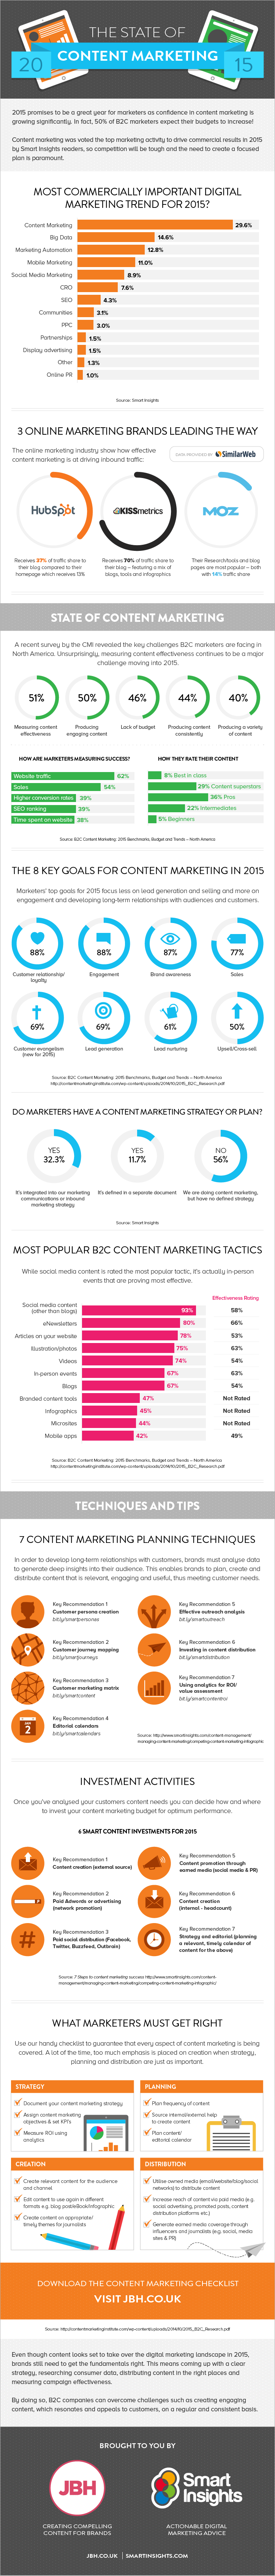 content-marketing-2015